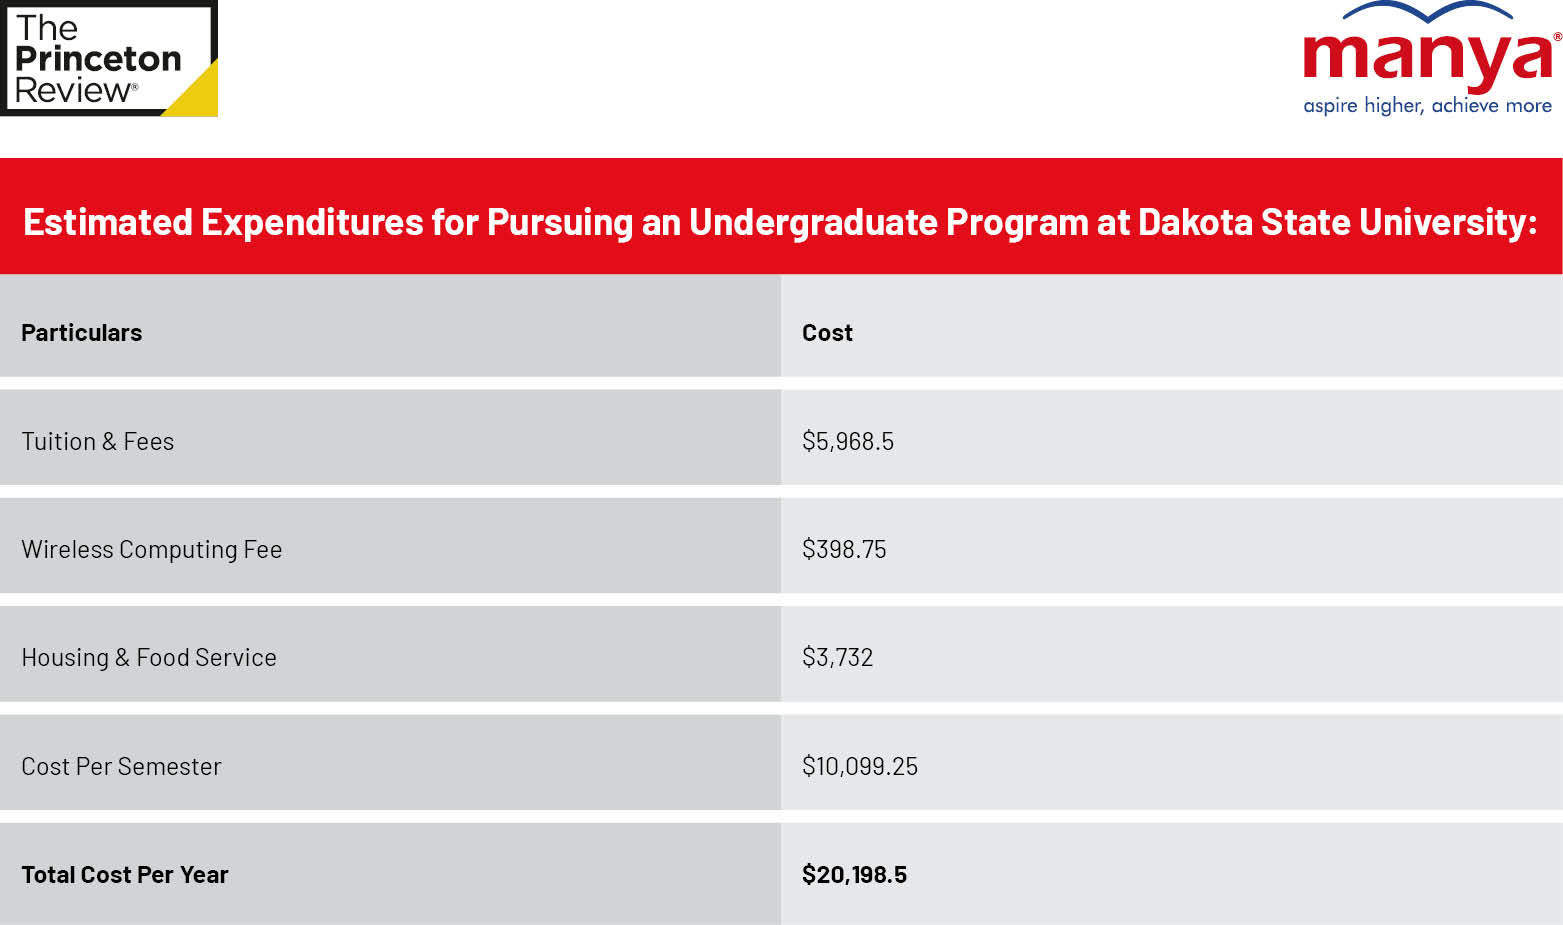 Estimated Expenditures for Pursuing an Undergraduate Program at Dakota State University